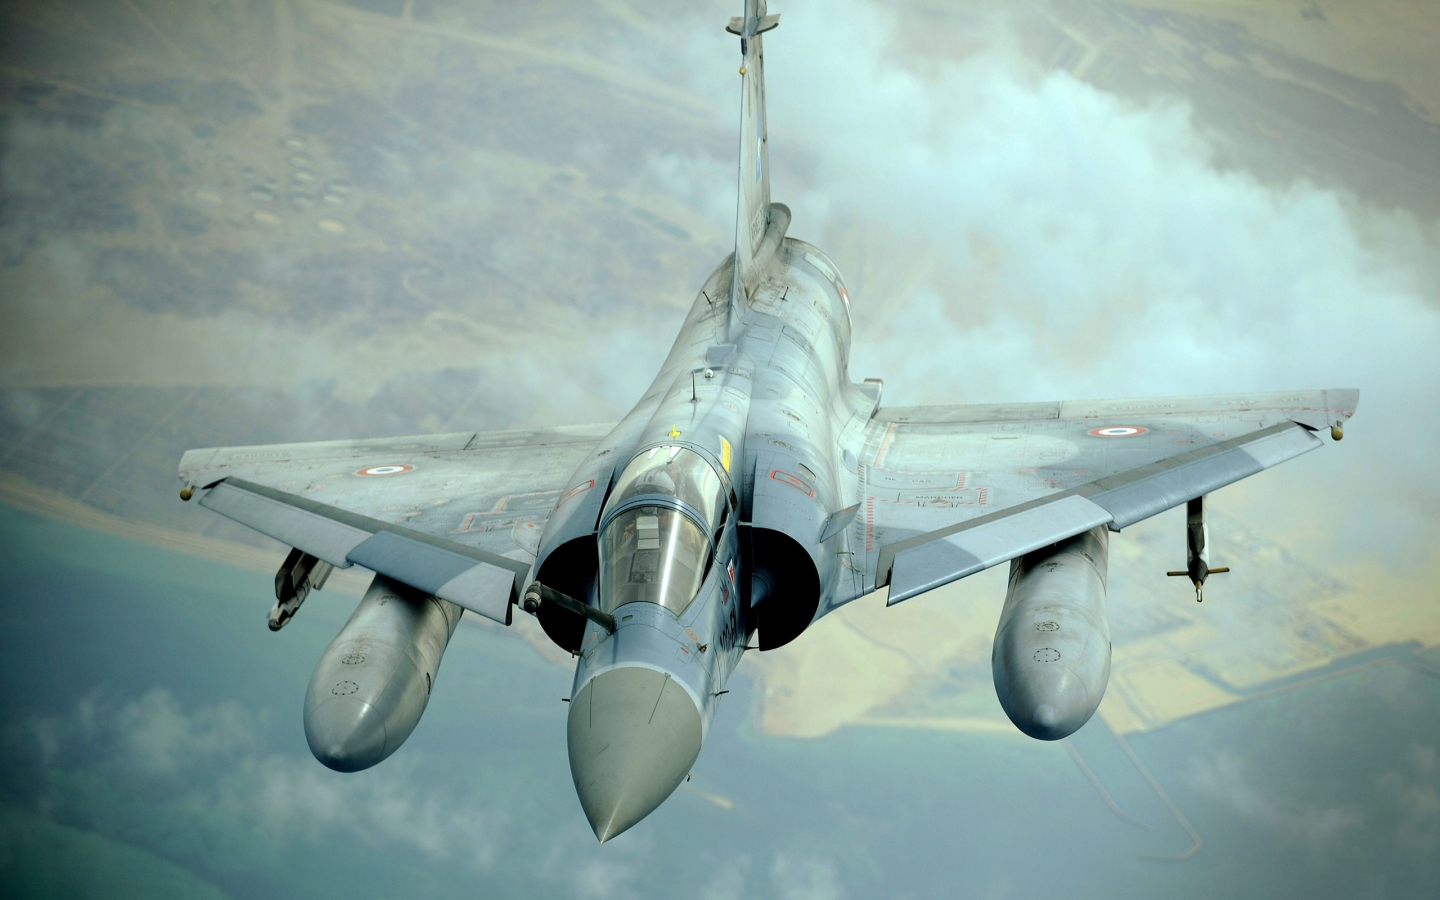 Dassault Mirage 2000 for 1440 x 900 widescreen resolution